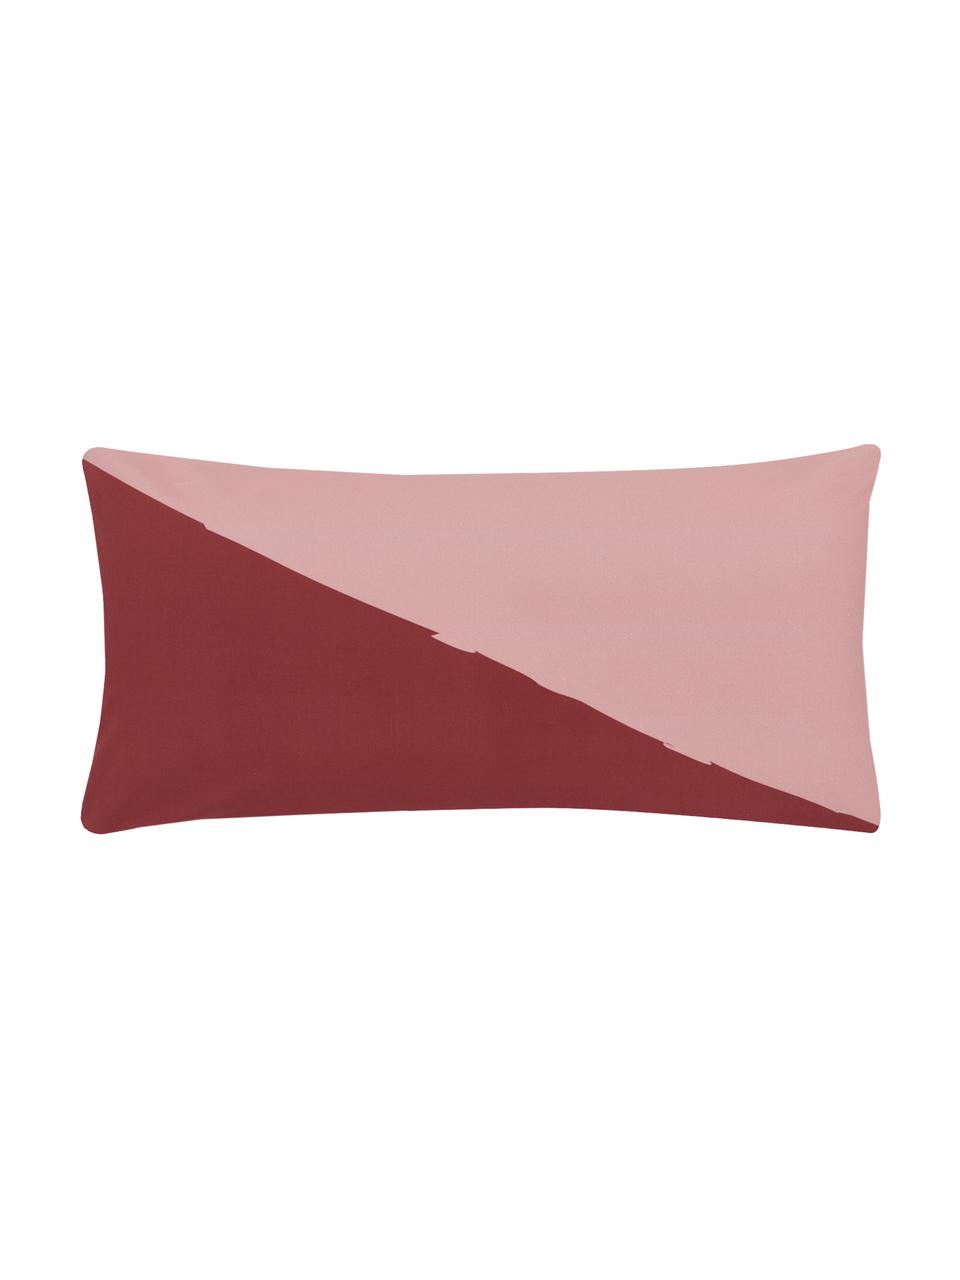 Perkal-Kissenbezüge Colorblock mit geometrischem Muster, 2 Stück, Webart: Perkal, Rot, Rosa, Gelb, Cremeweiss, 40 x 80 cm